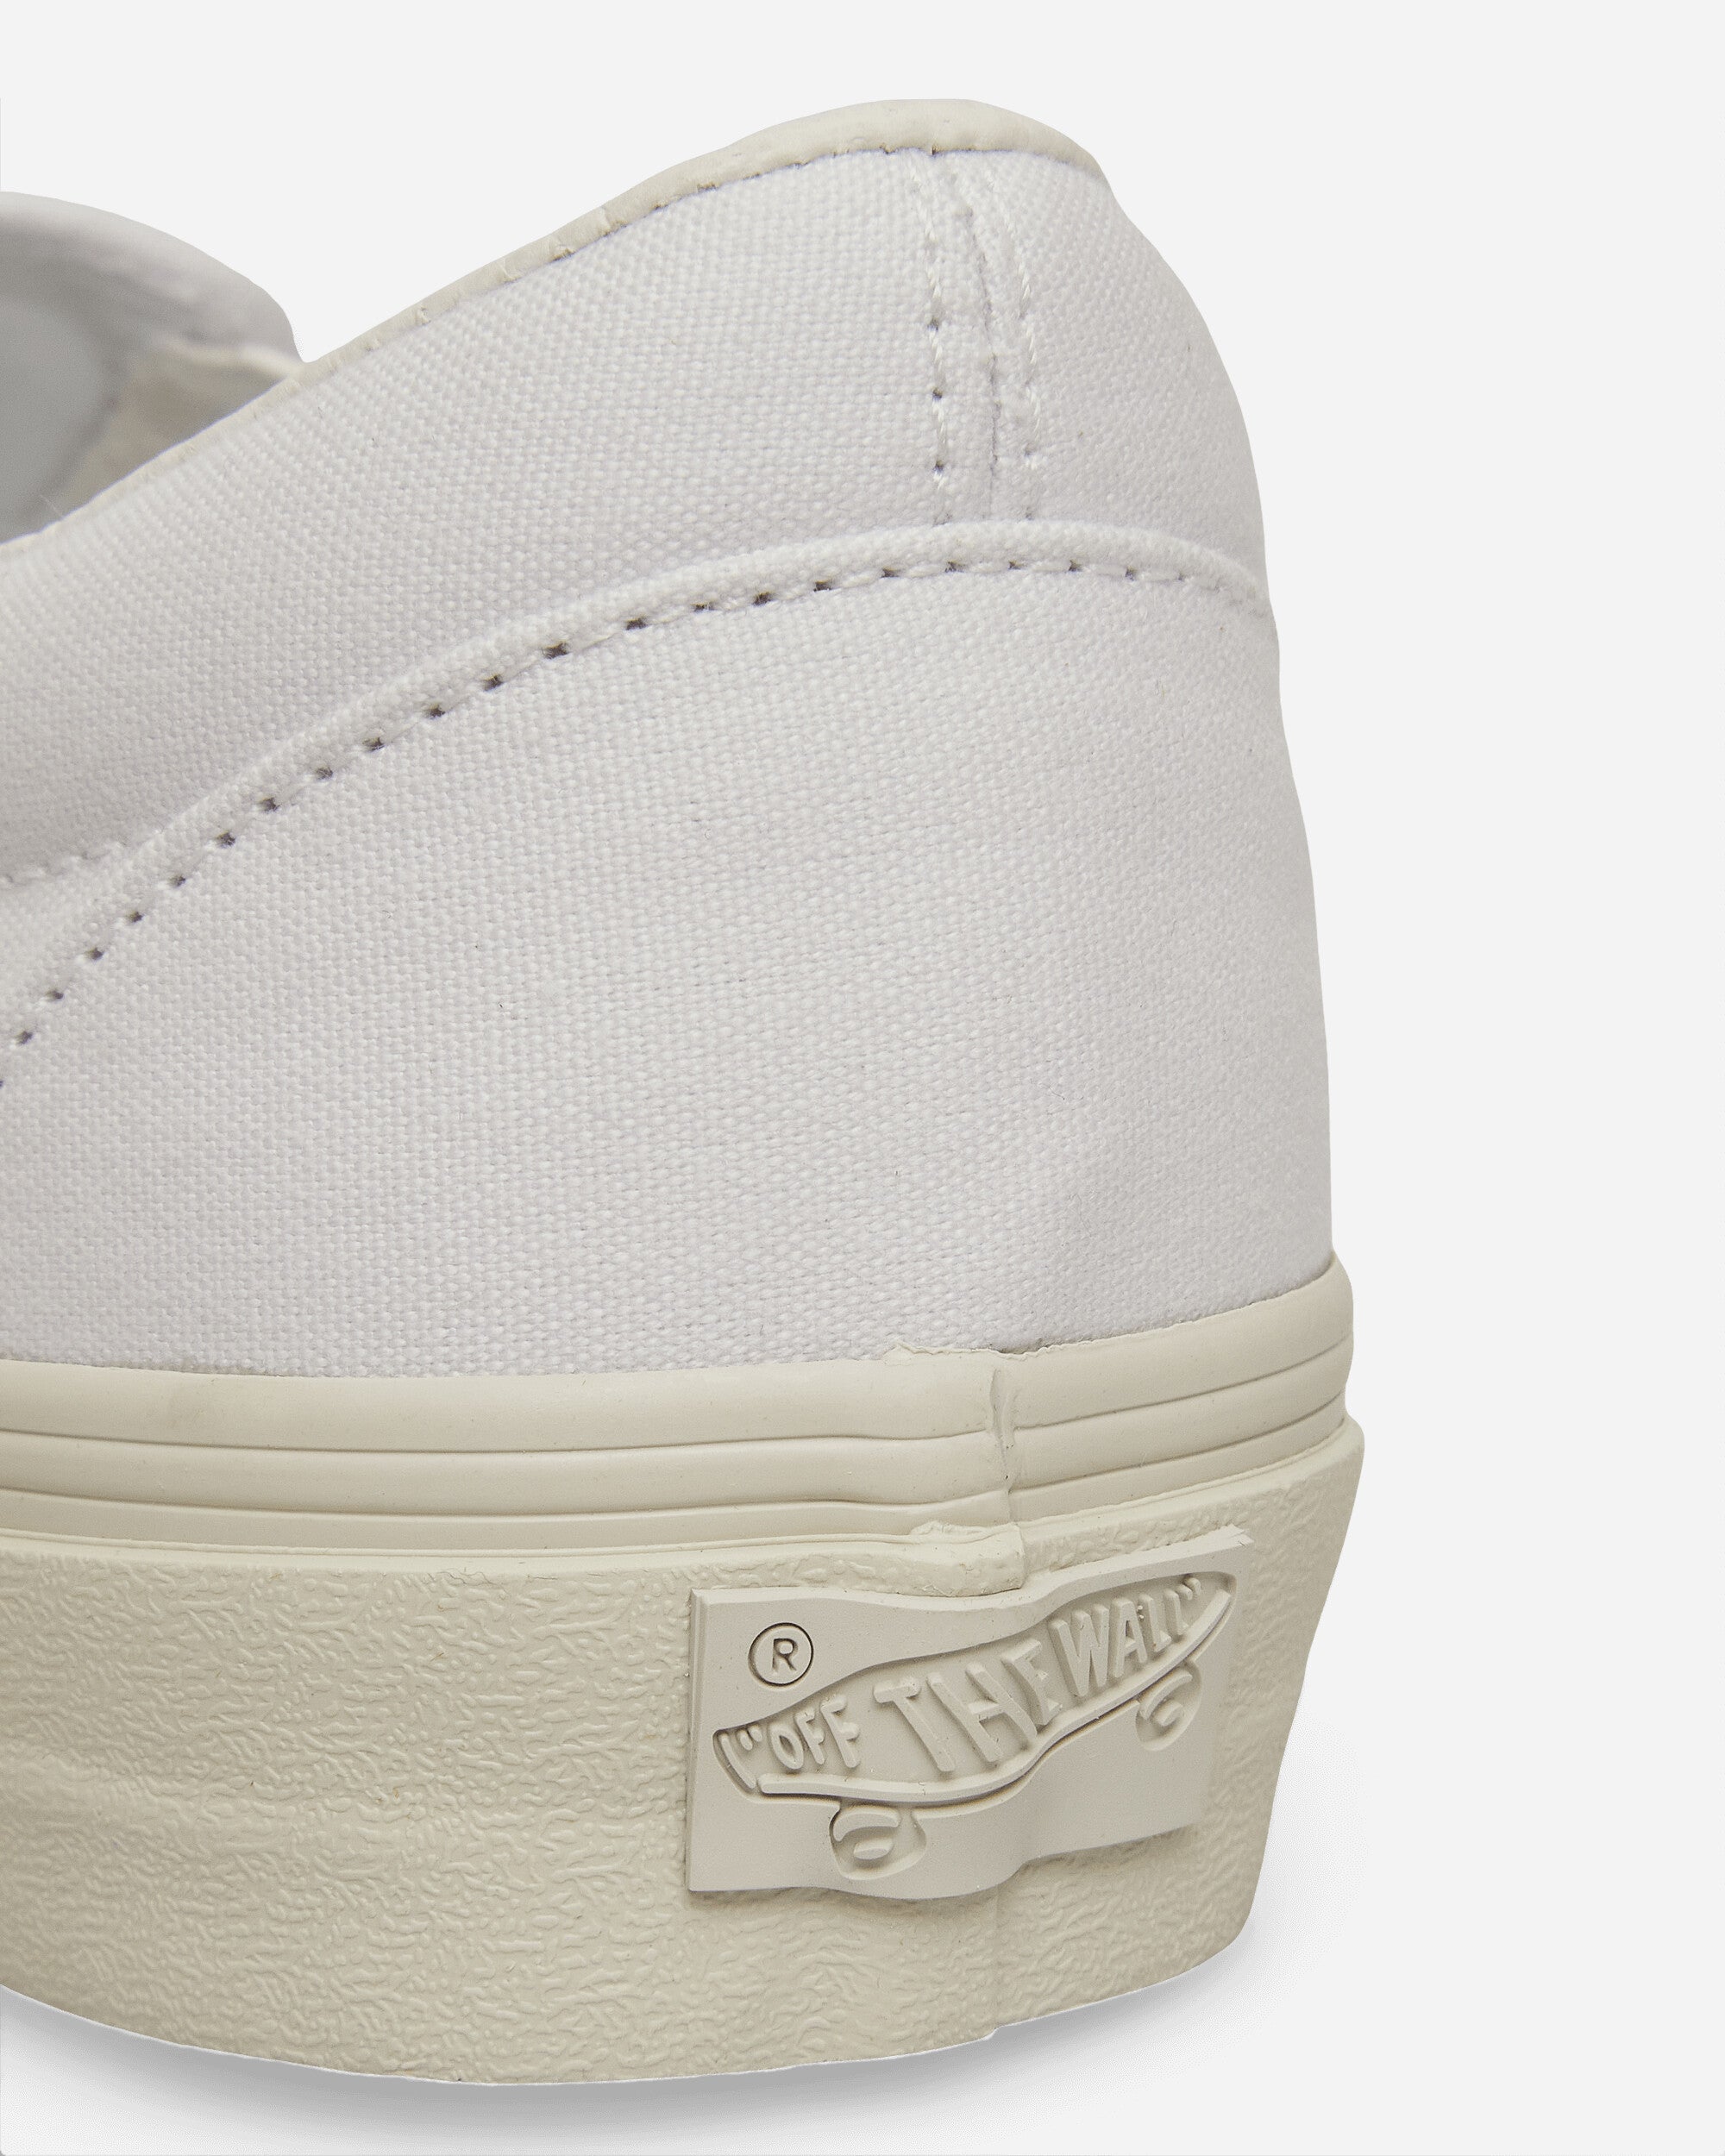 Vans Ua Classic Slip-On Vlt Lx Jjjjound True White Sneakers Slip-On VN0A3QXYW001